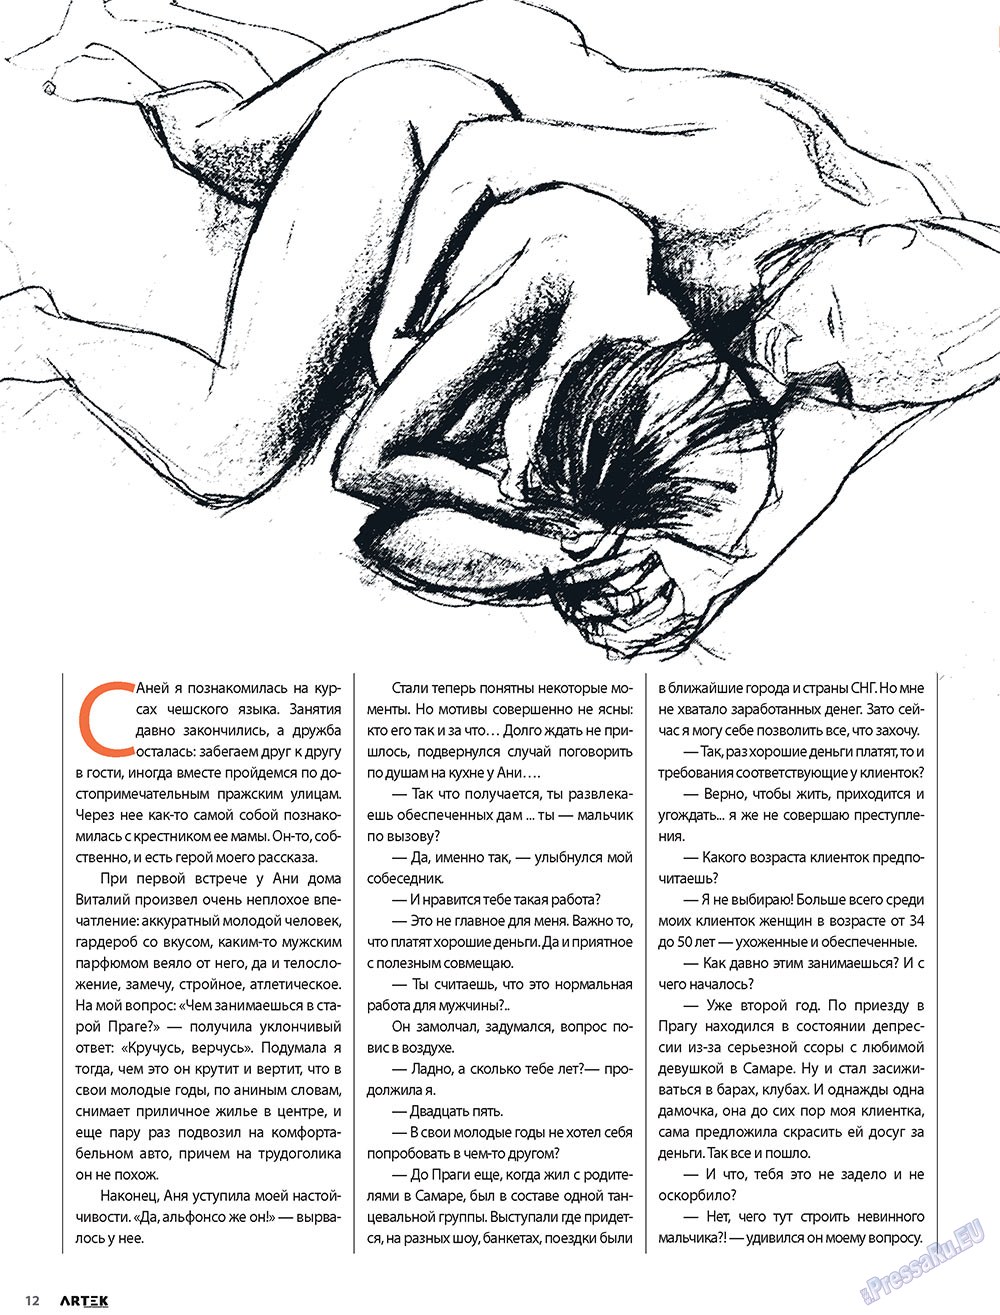 Артек (журнал). 2010 год, номер 1, стр. 14